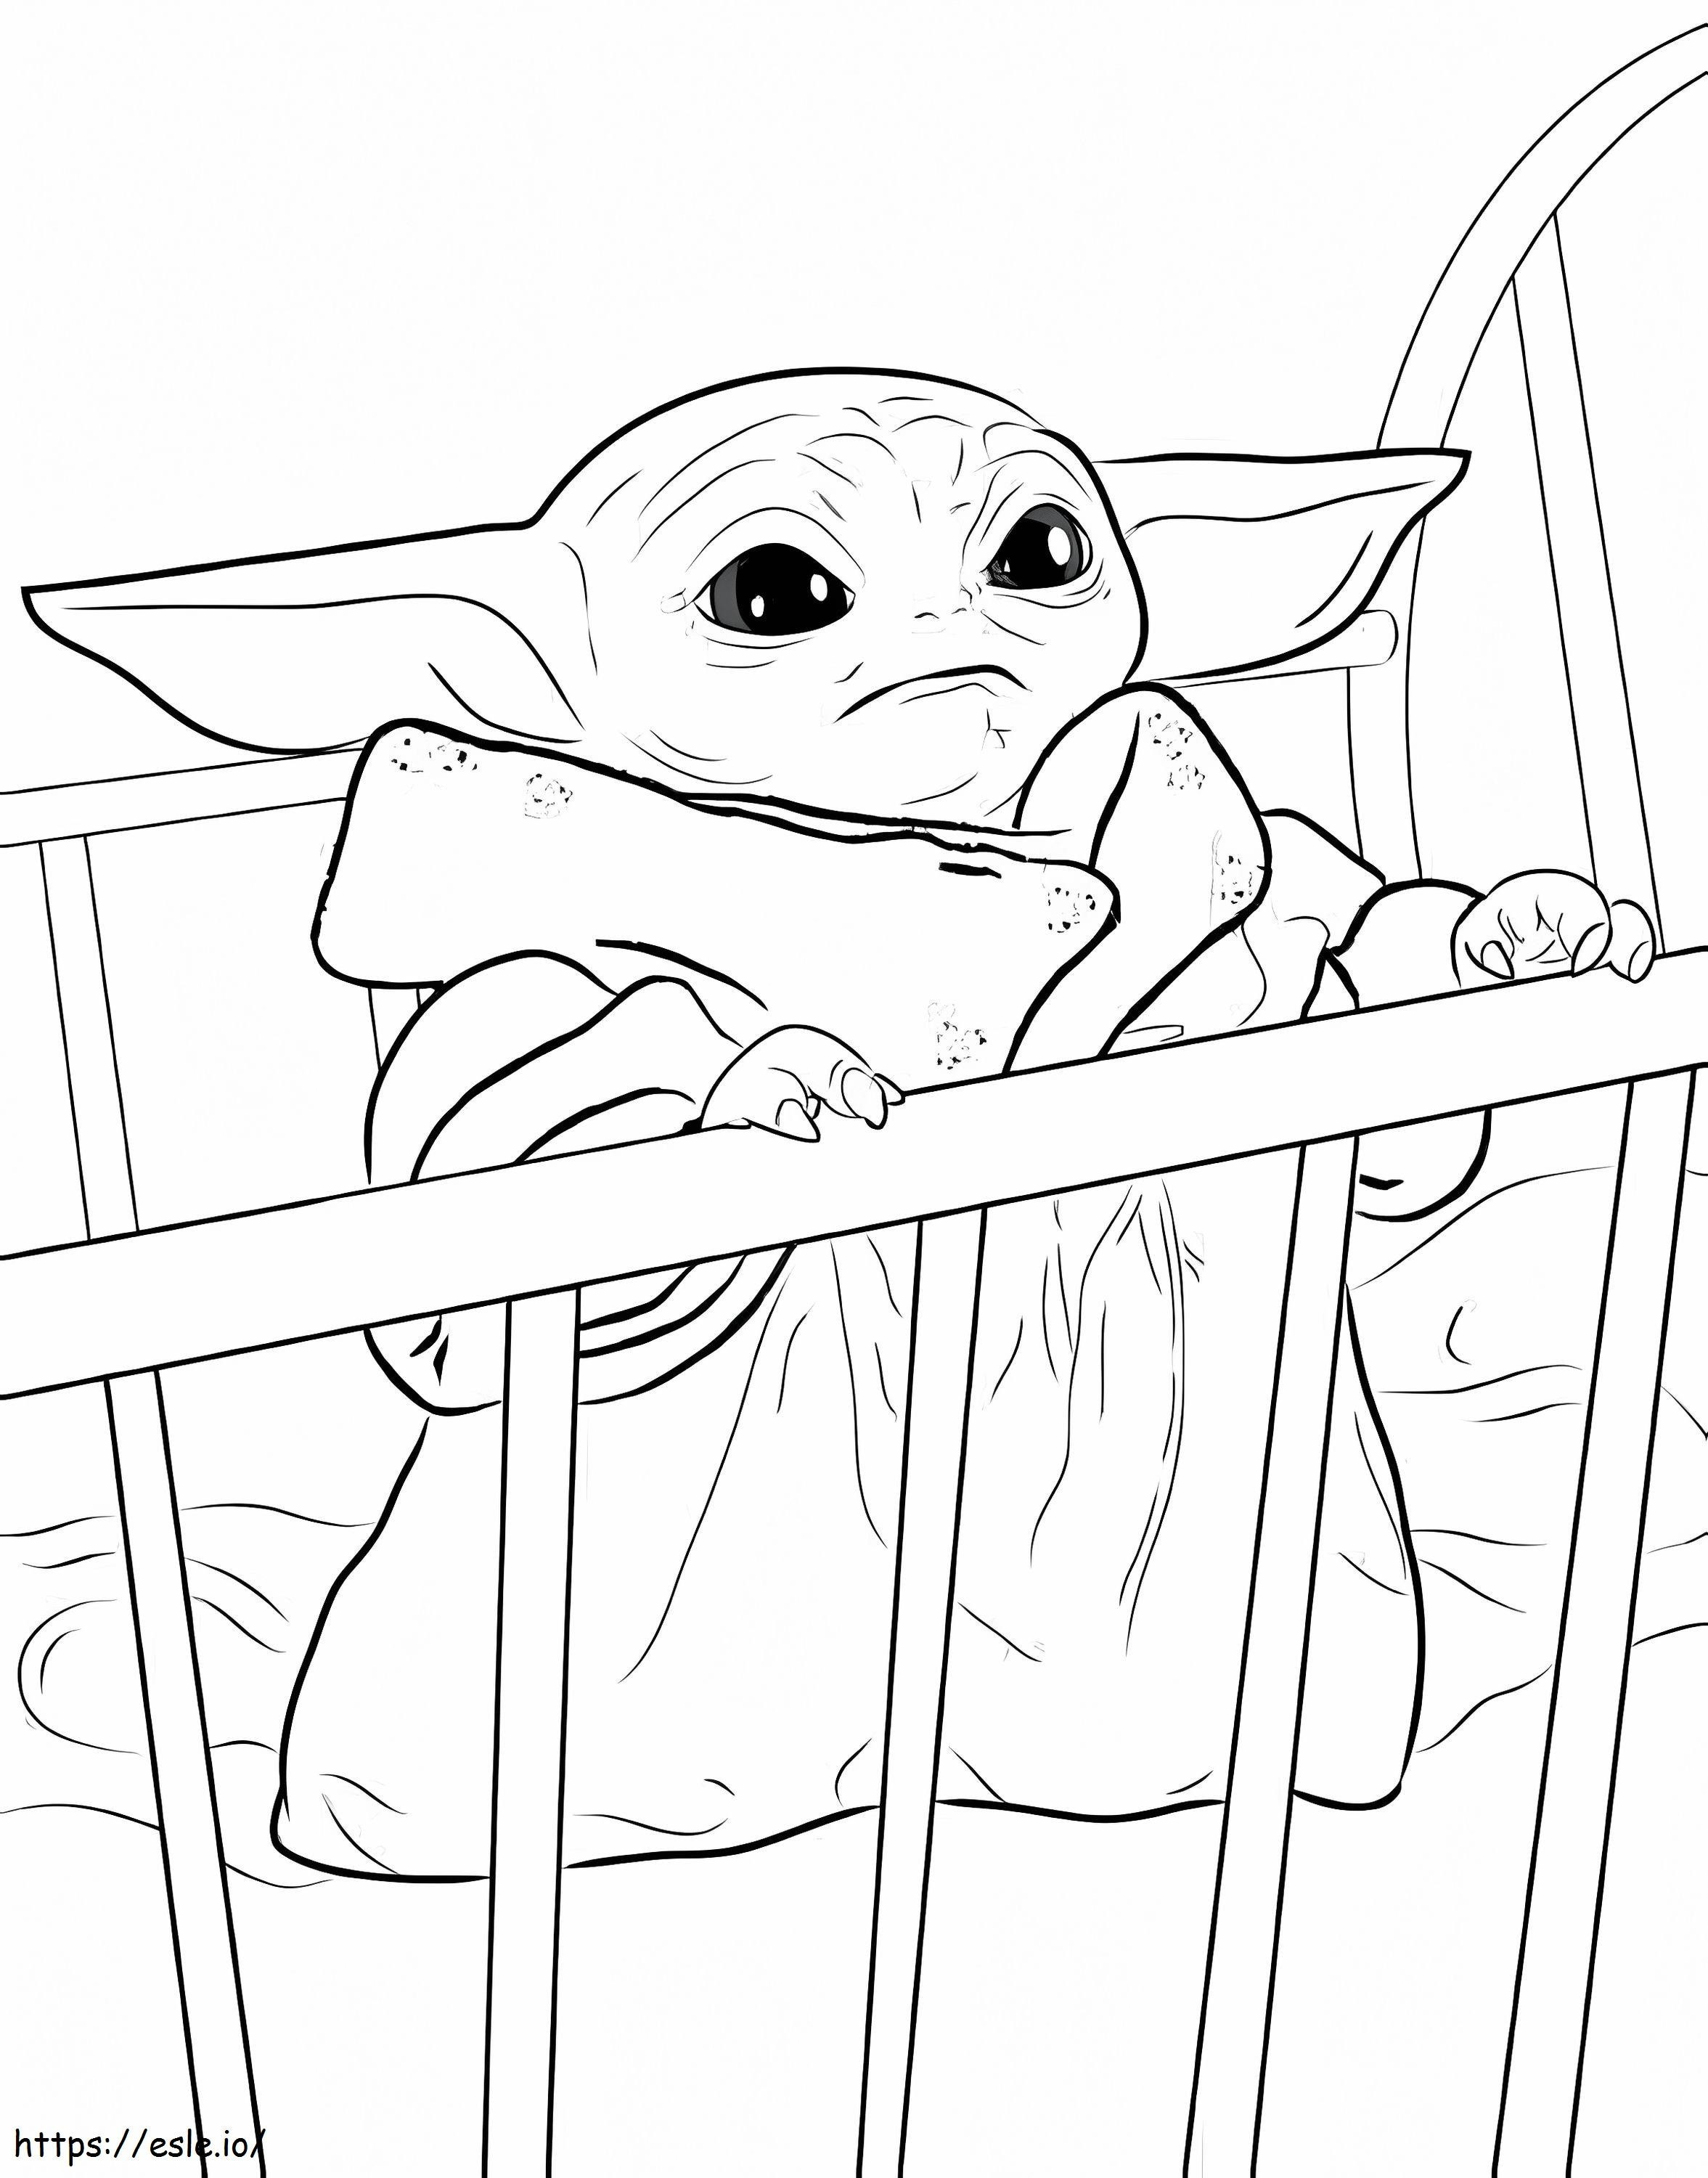 Fabulous Baby Yoda coloring page